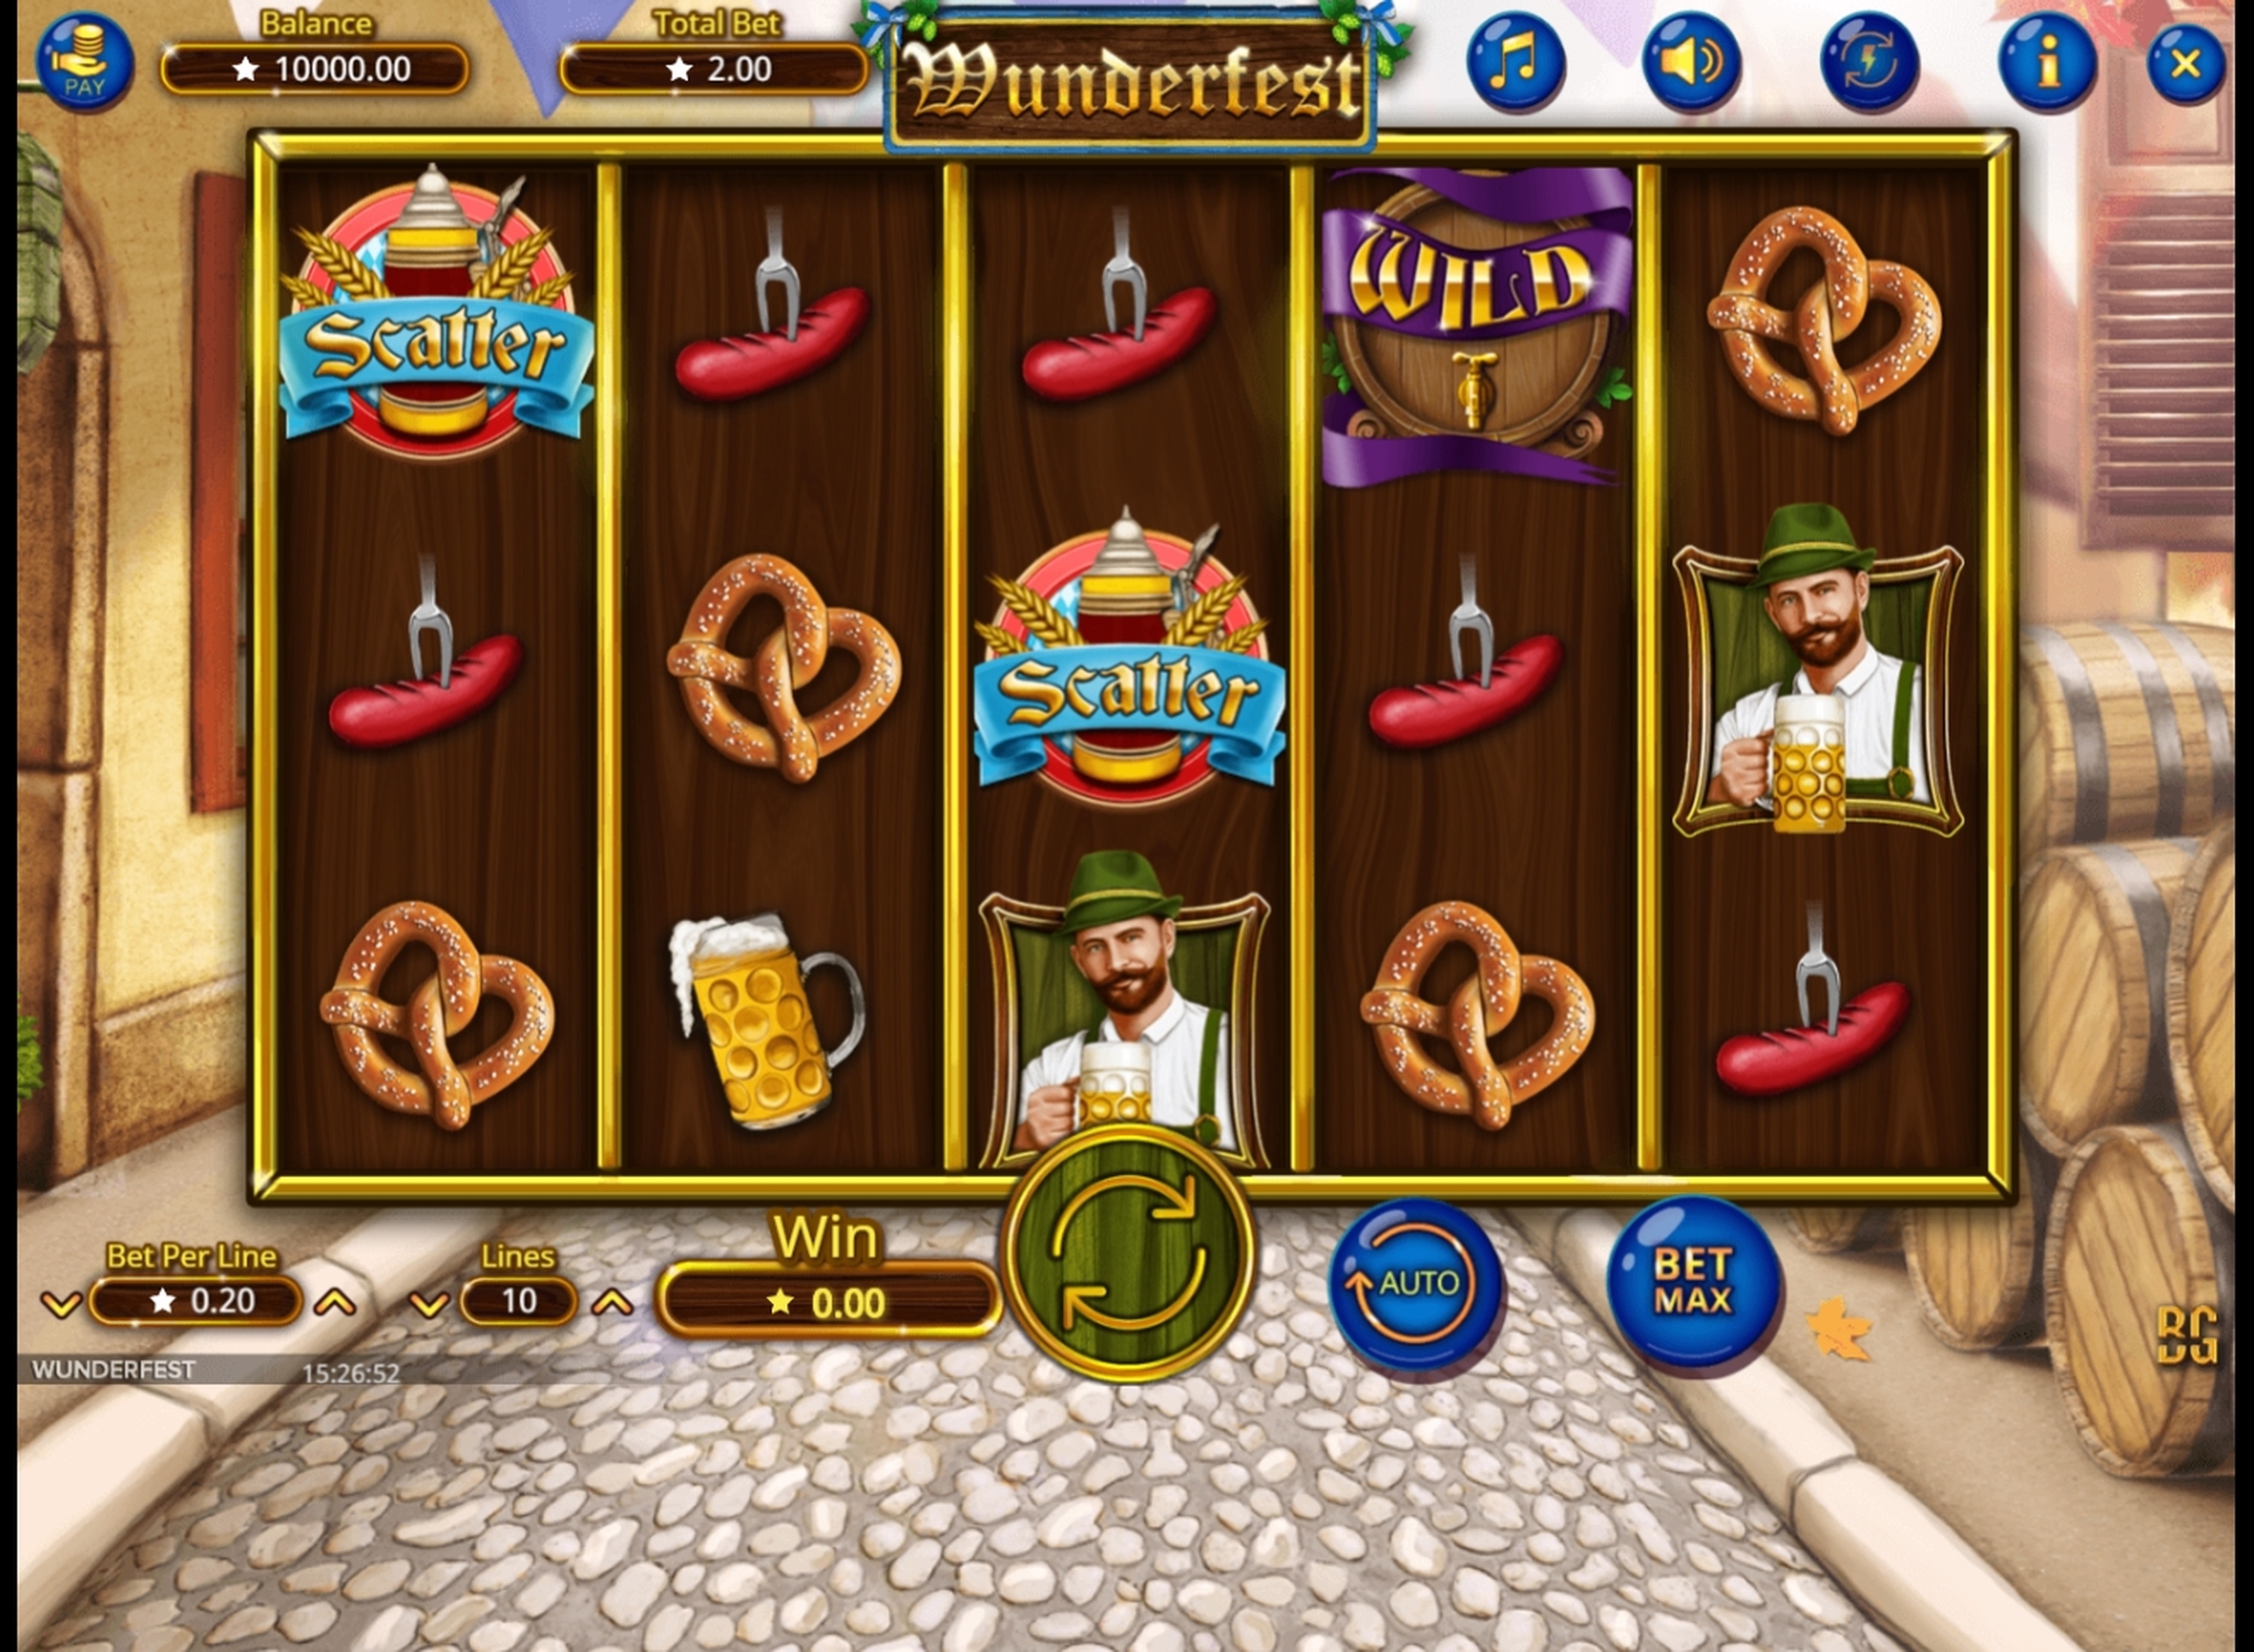 Reels in Wunderfest Slot Game by Booming Games